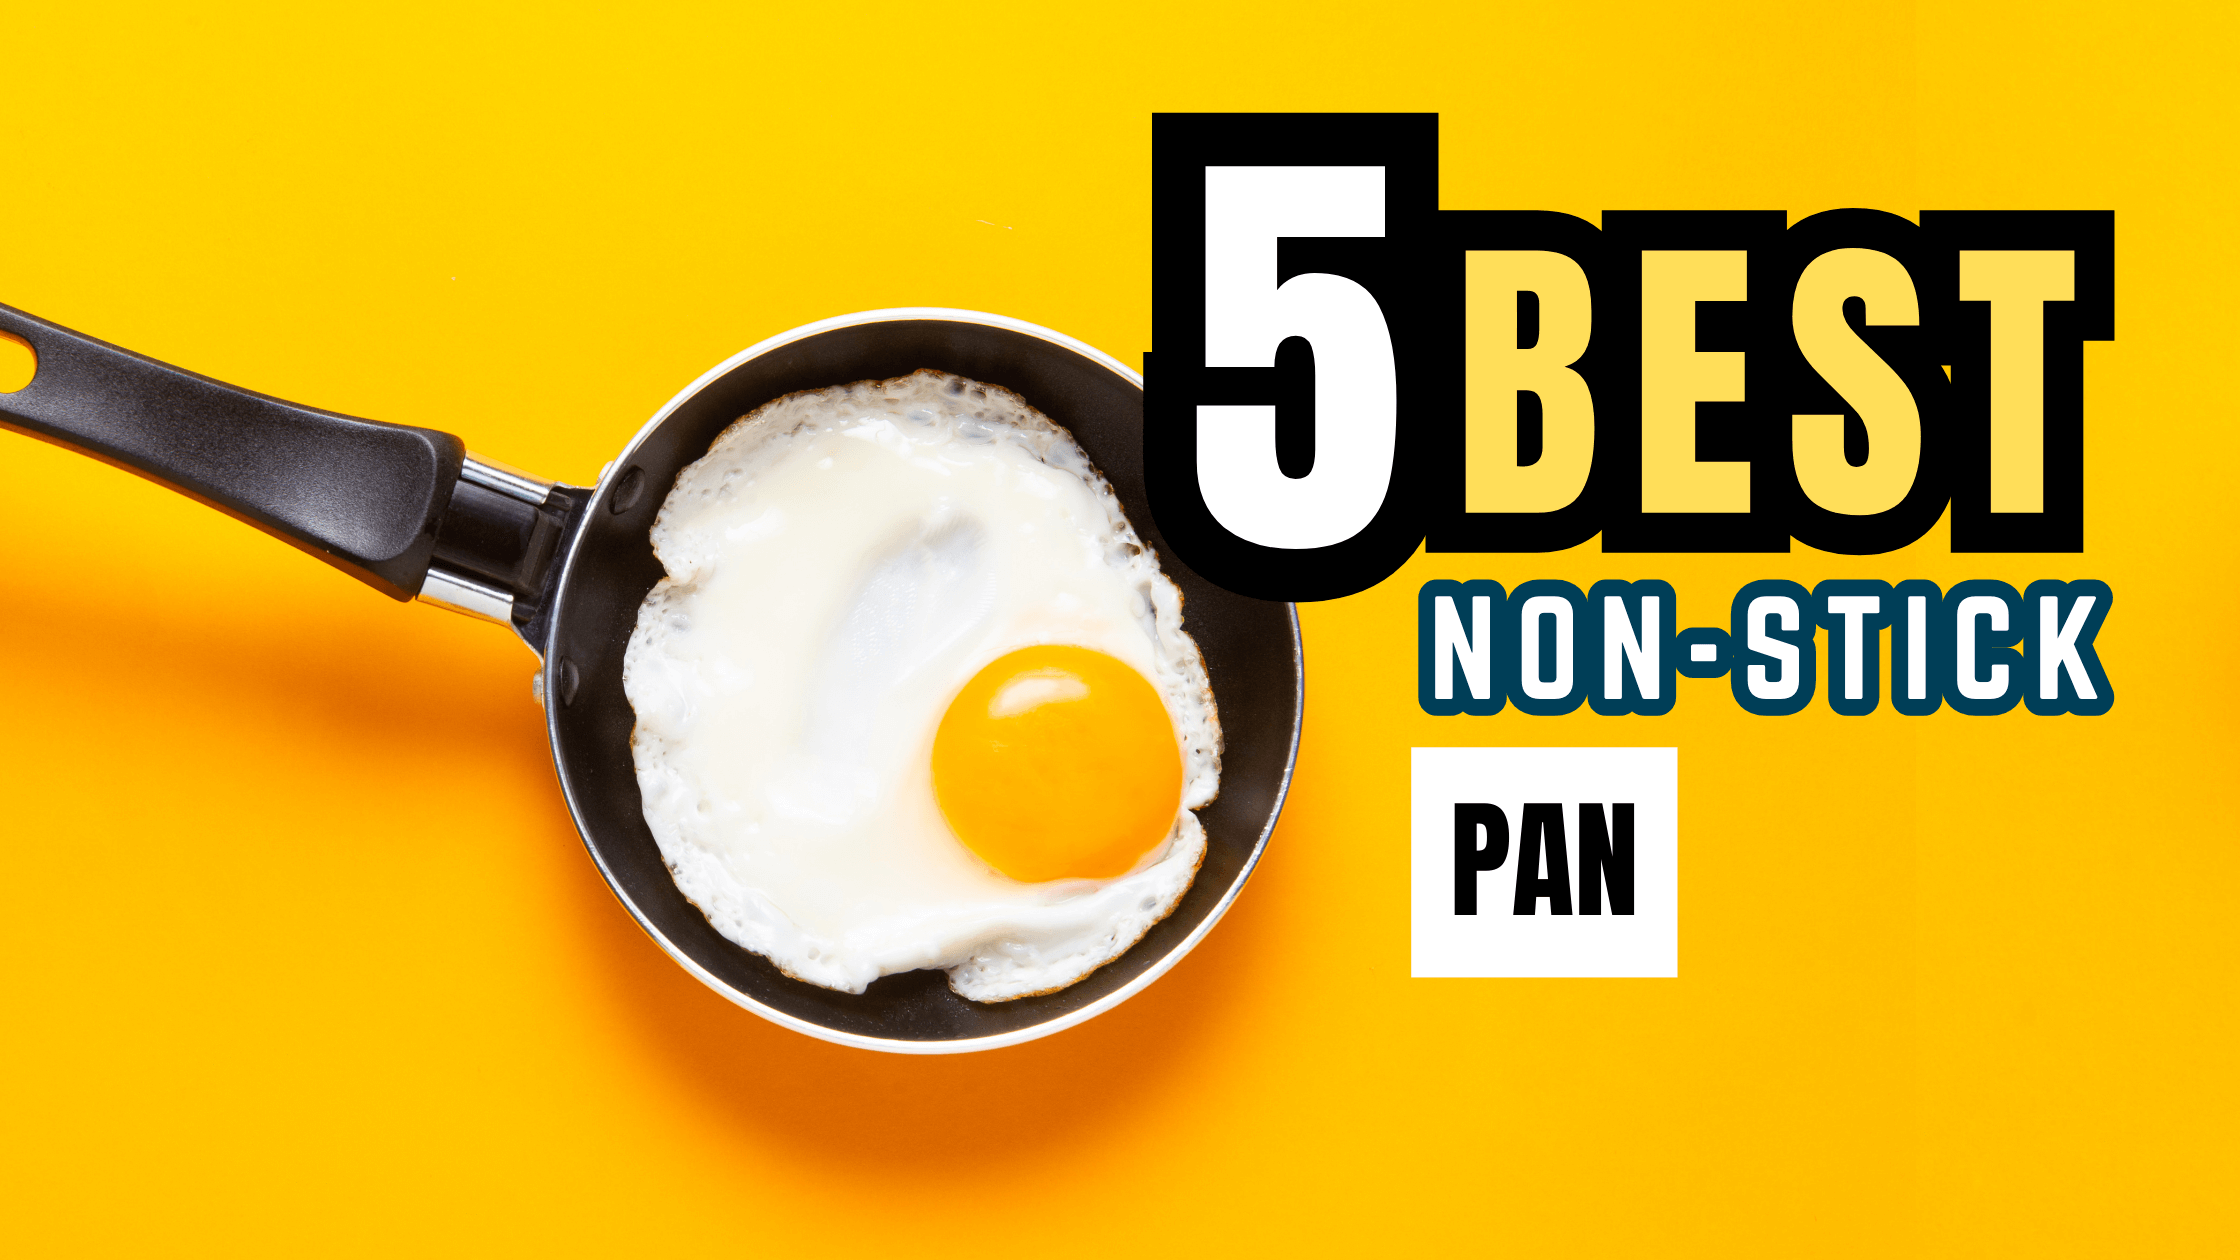 5 Best Non-stick Pan